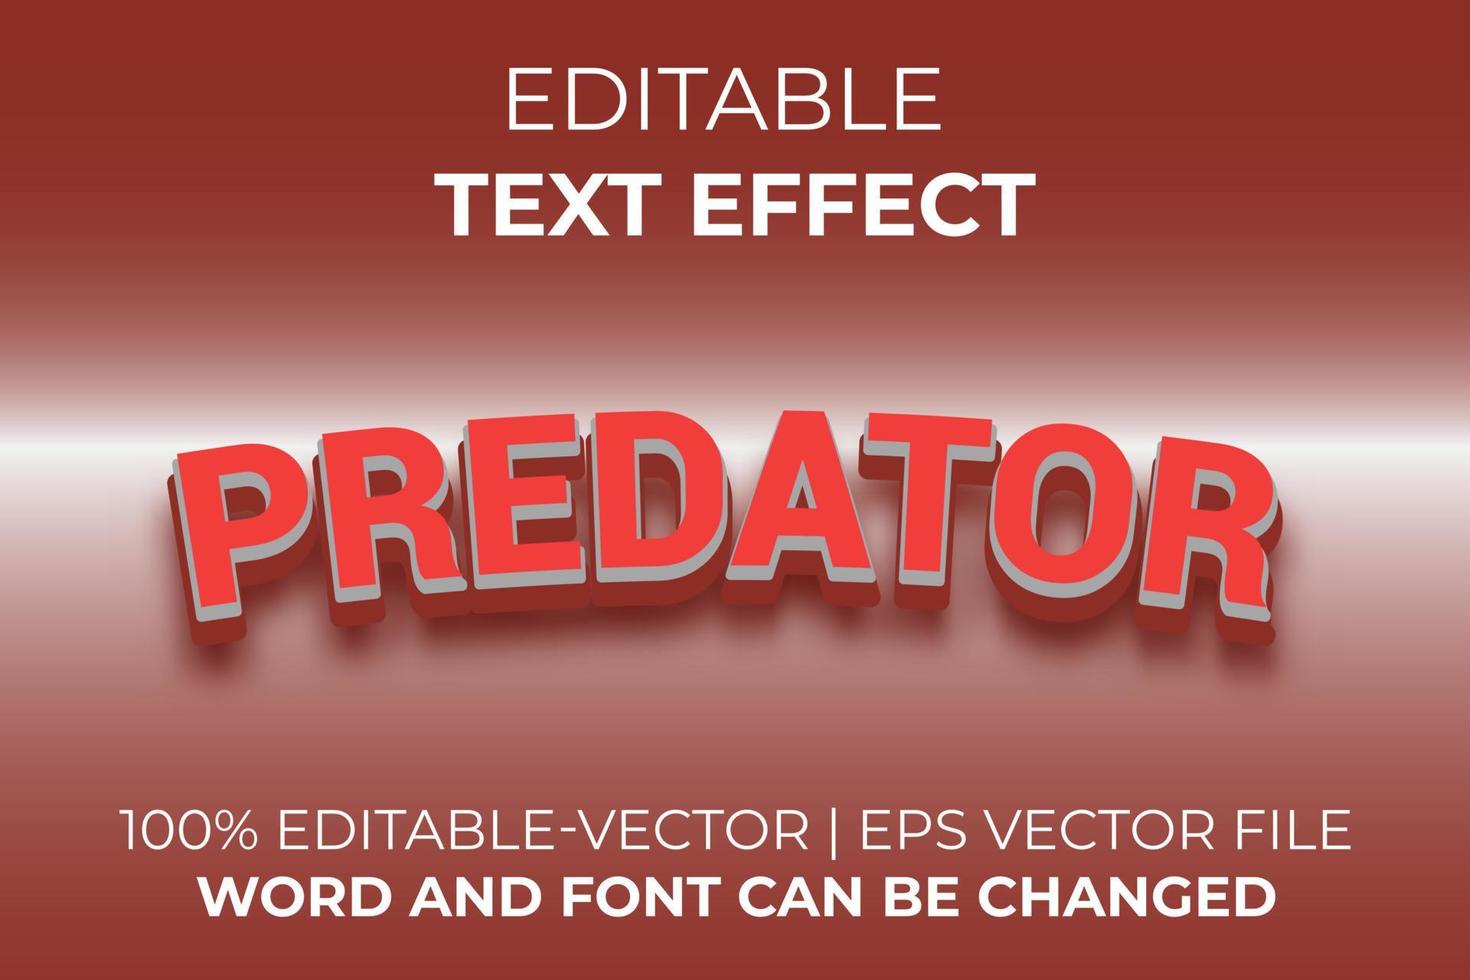 Predator text effect, easy to edit vector